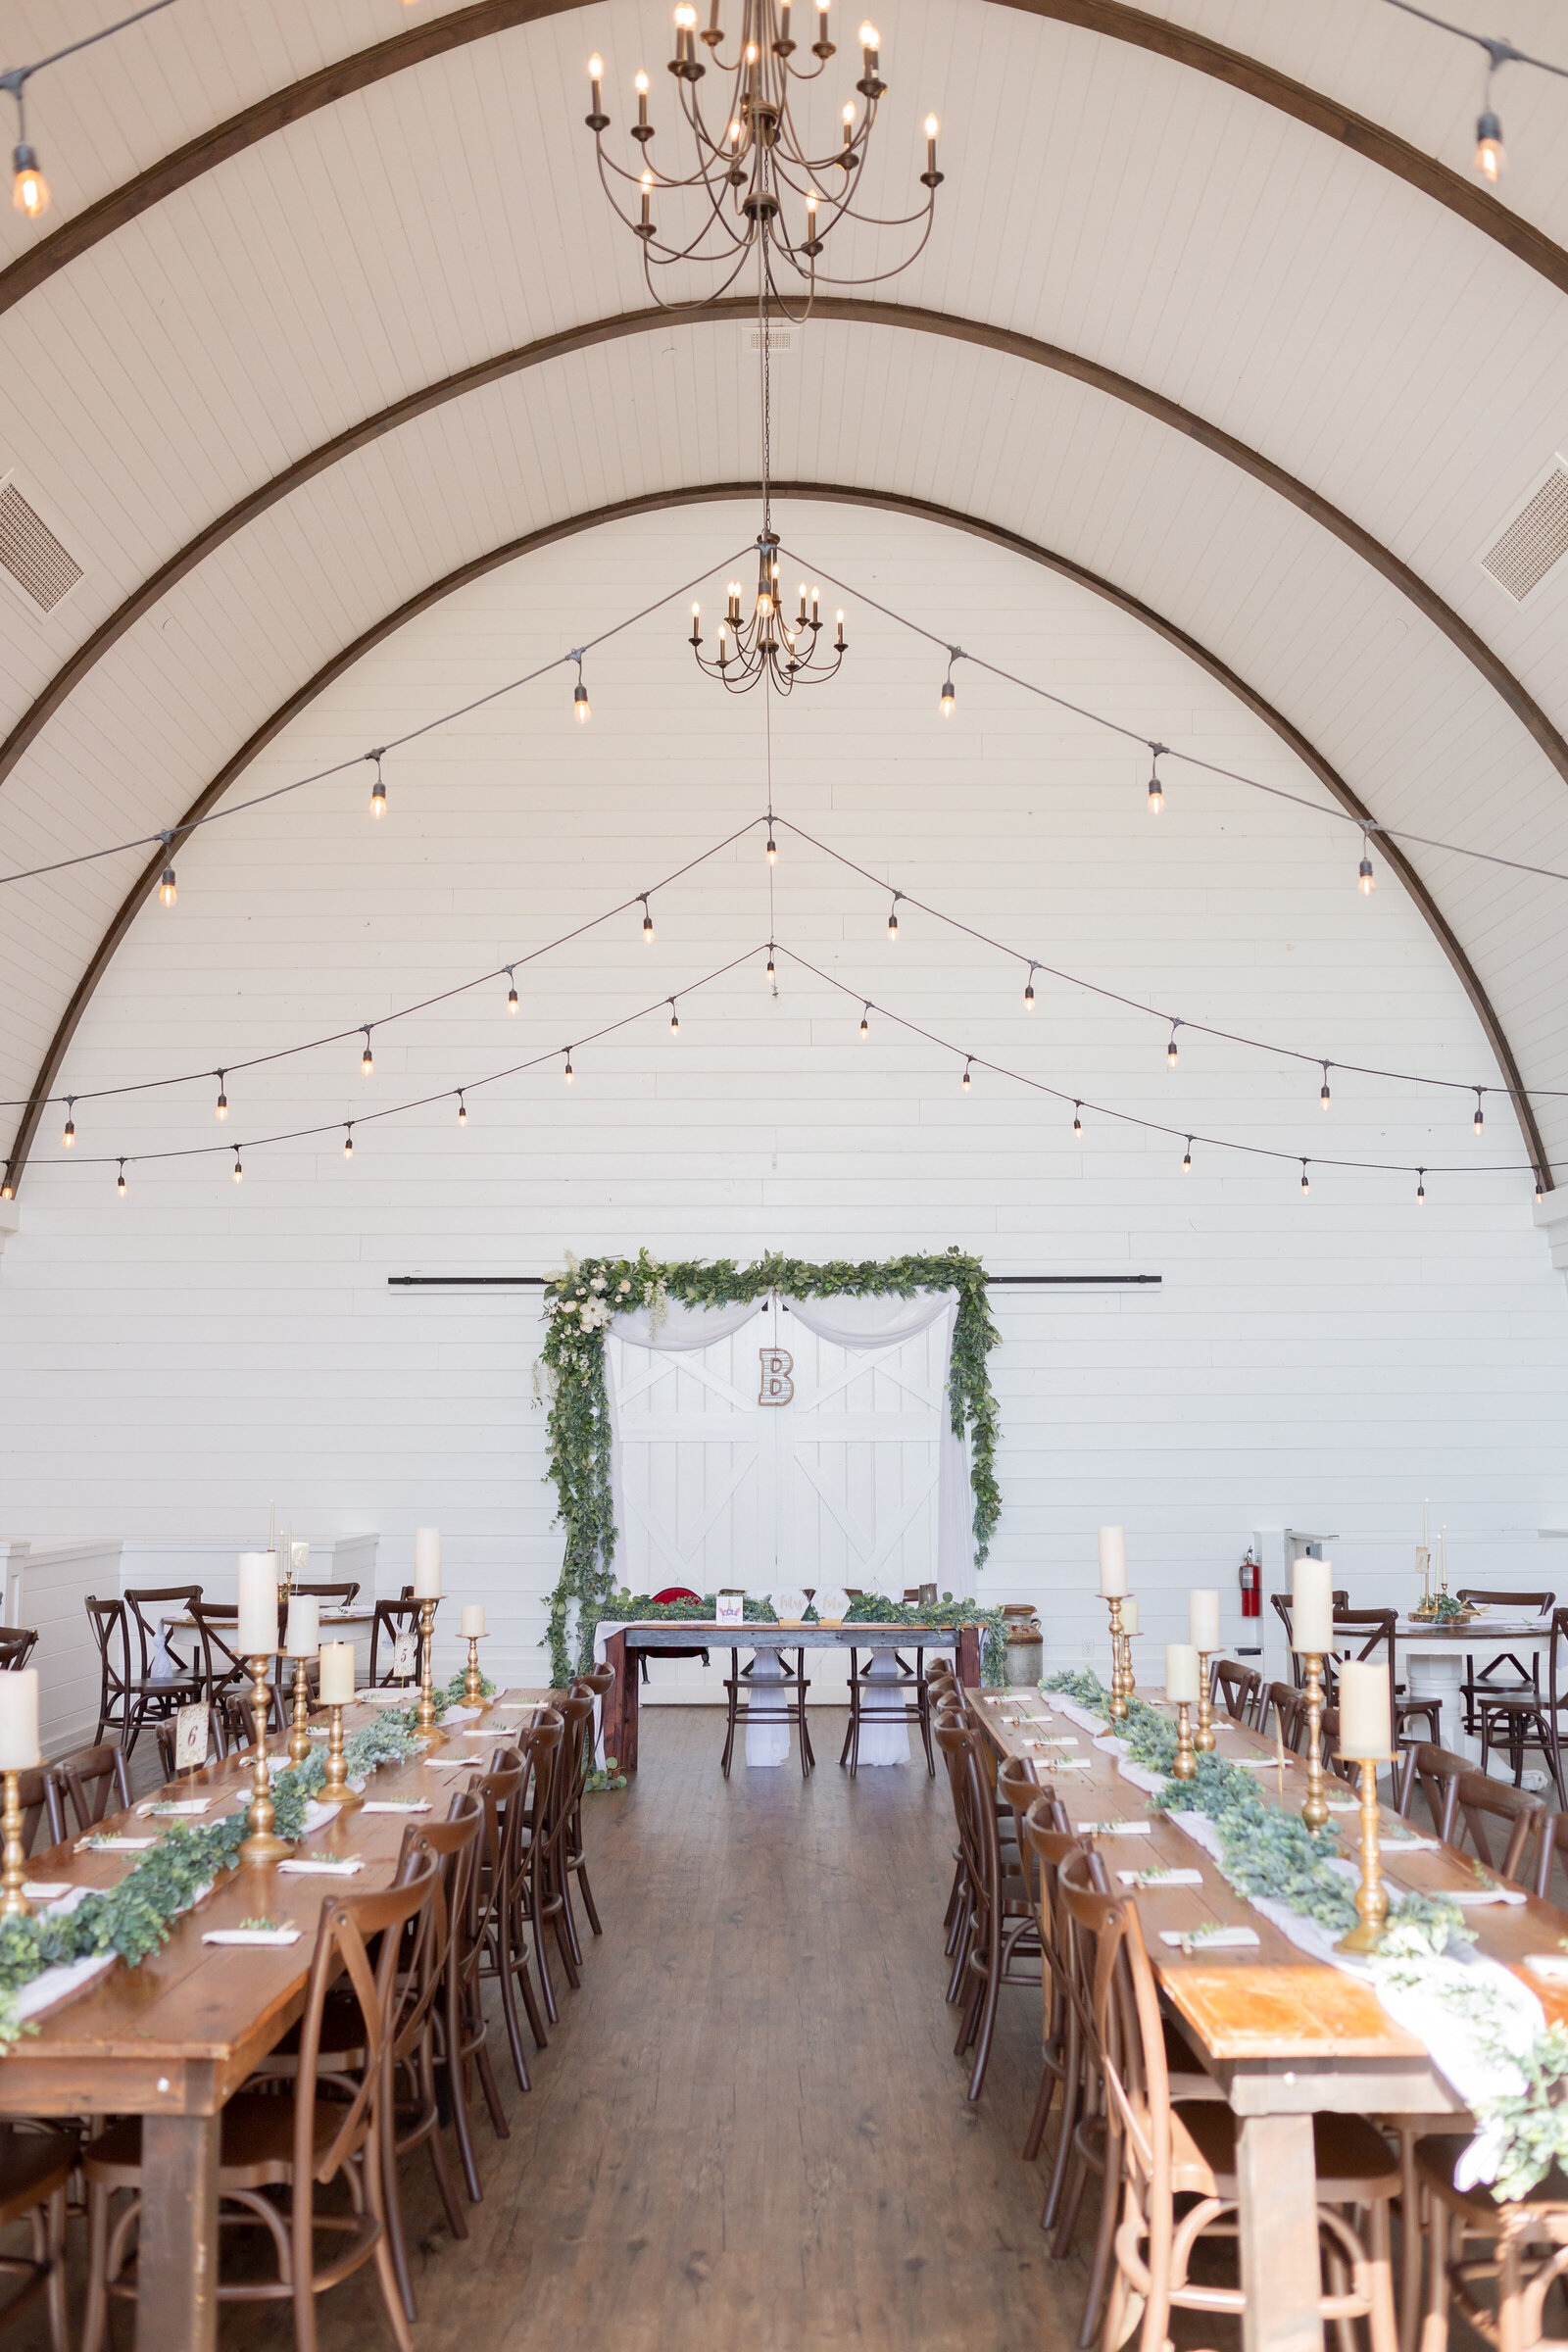 Idaho Falls Photographers capture indoor wedding reception